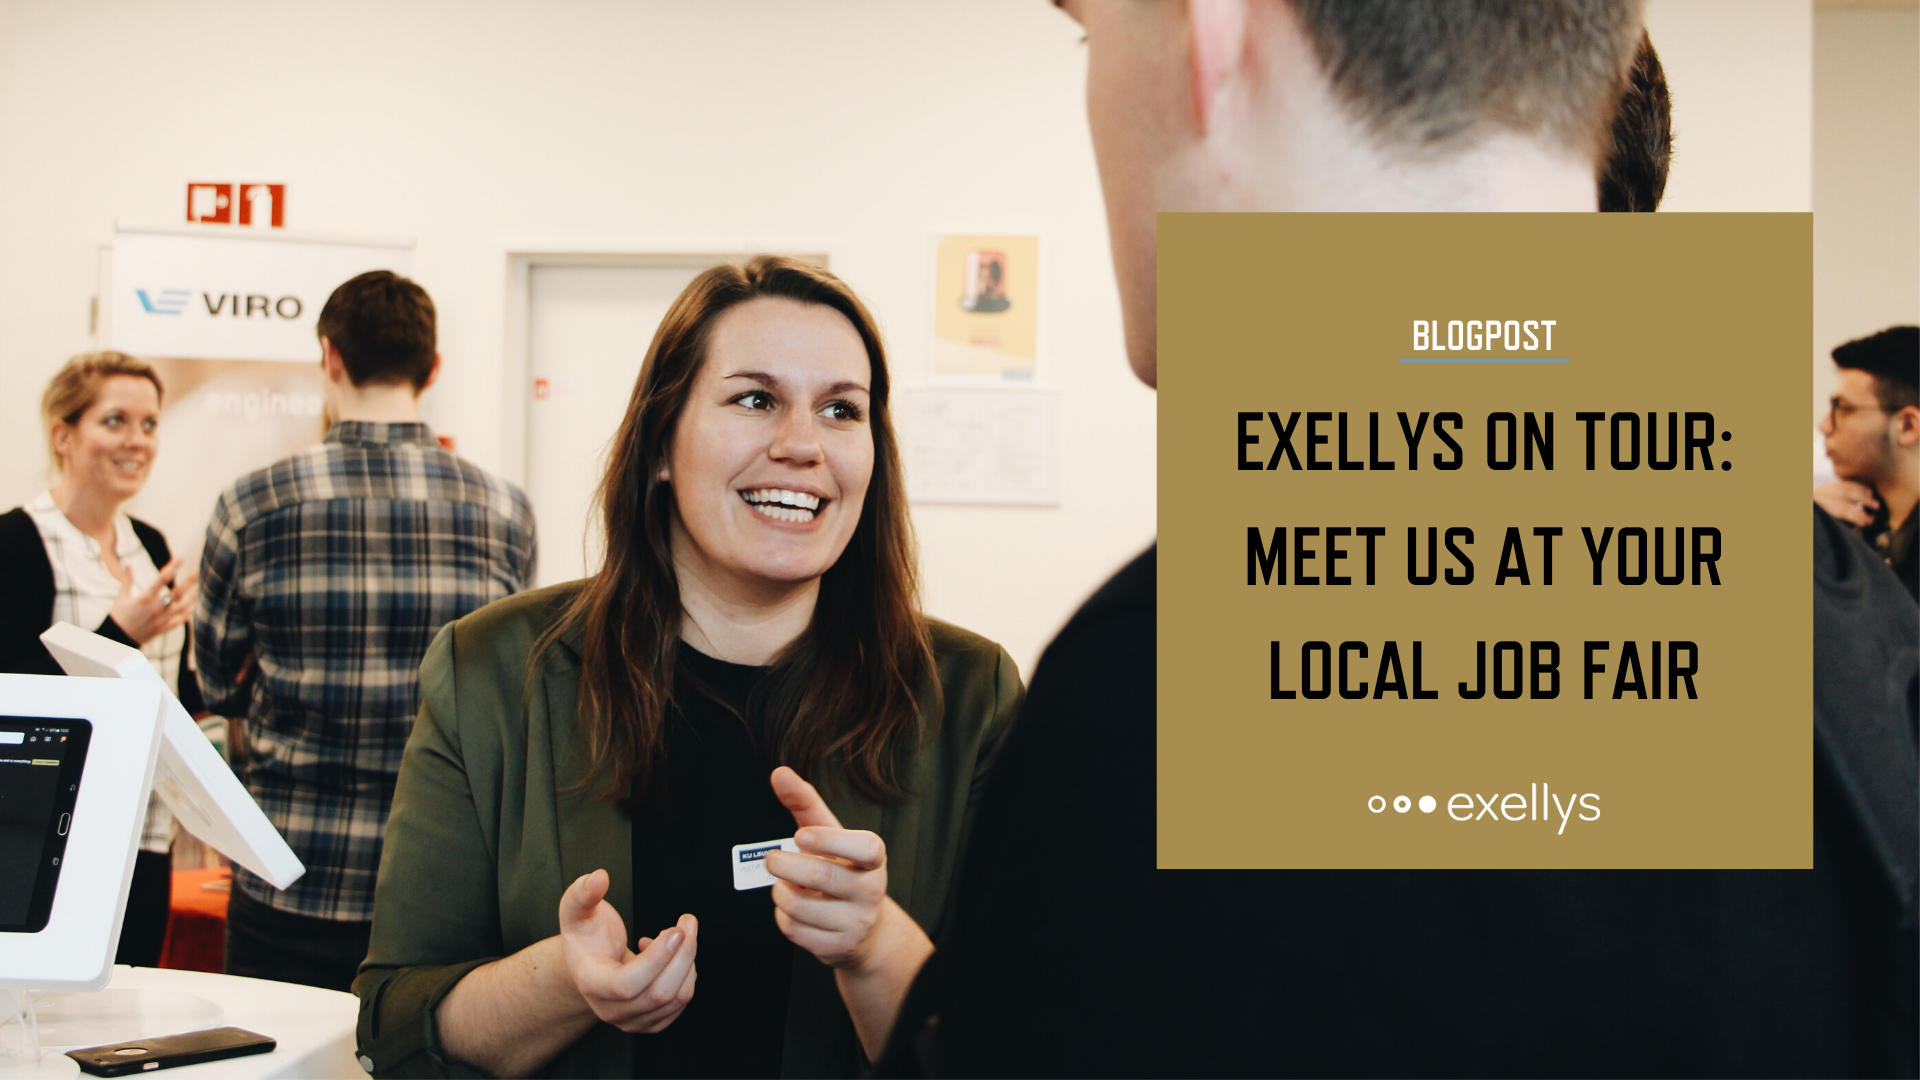 Exellys on tour – Meet us at your local job fair - LinkedIn share image